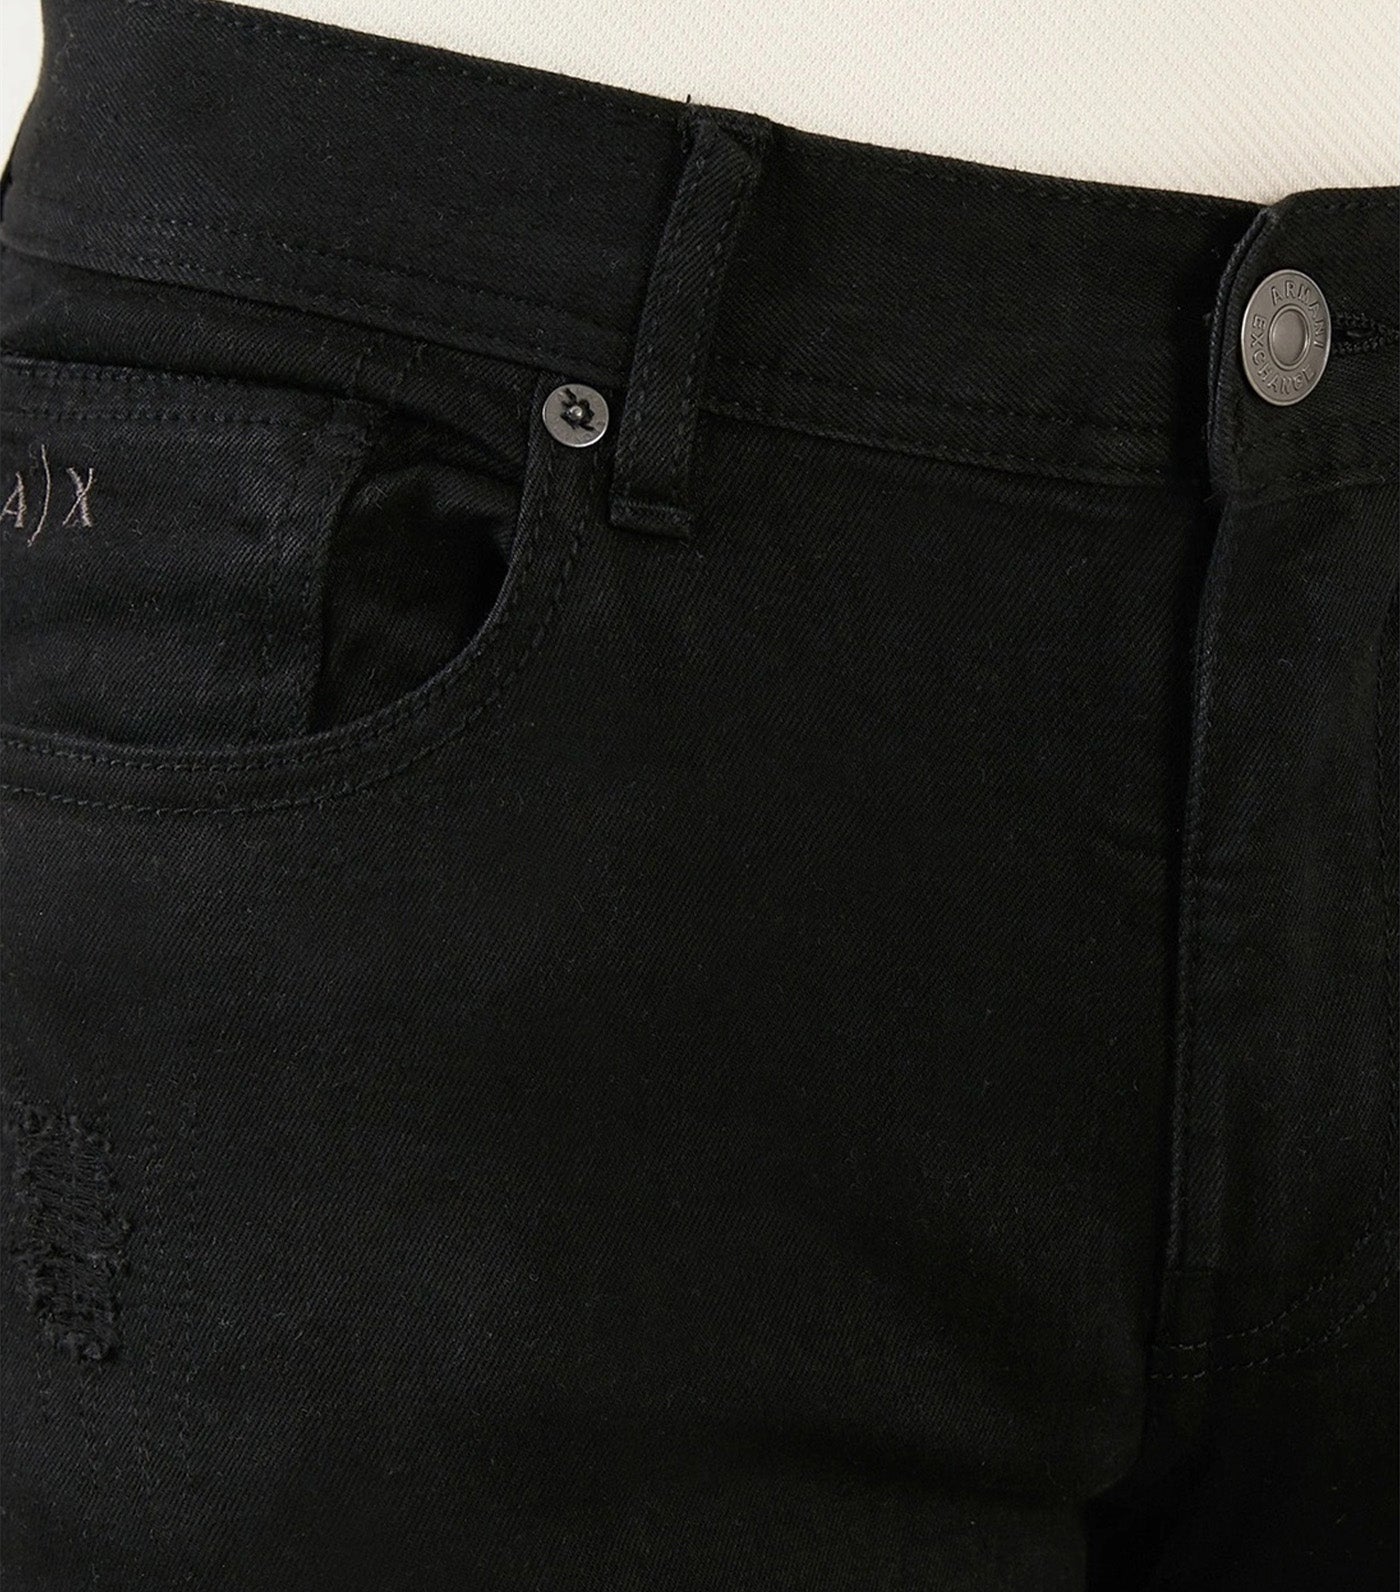 J13 Slim Fit Stretch Cotton Denim Jeans Black